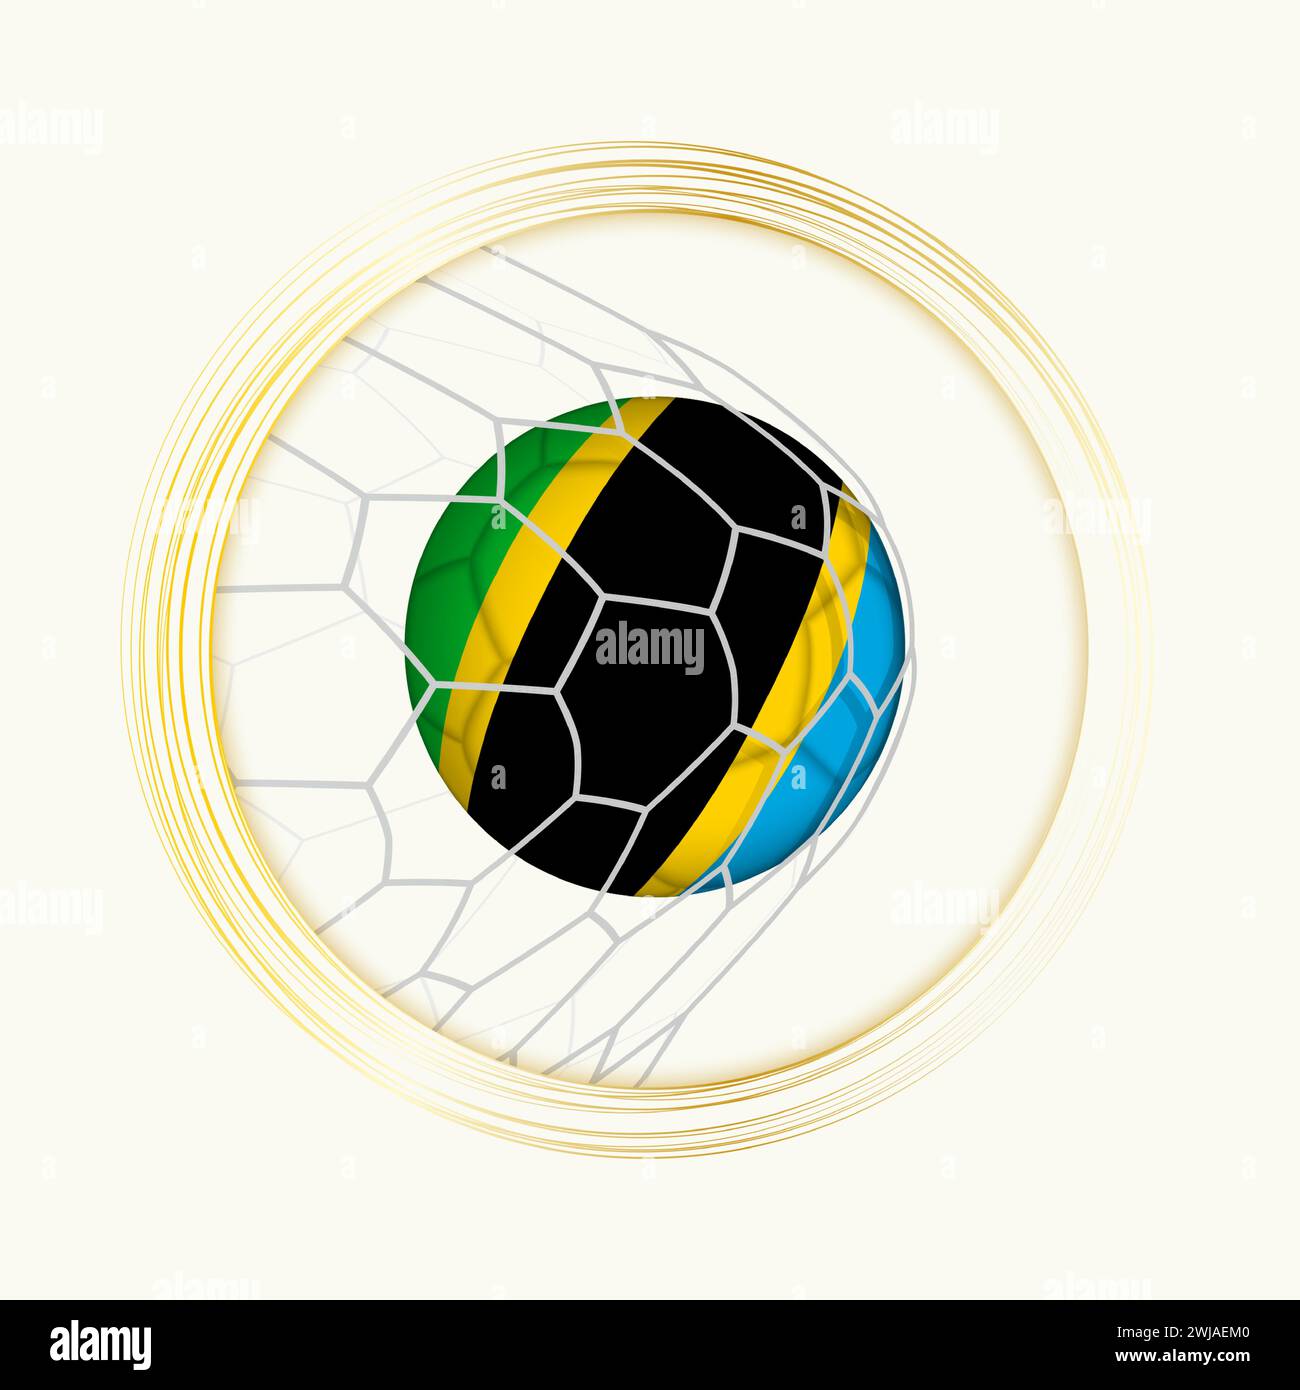 Tanzania scoring goal, abstract football symbol with illustration of Tanzania ball in soccer net. Vector sport illustration. Stock Vector